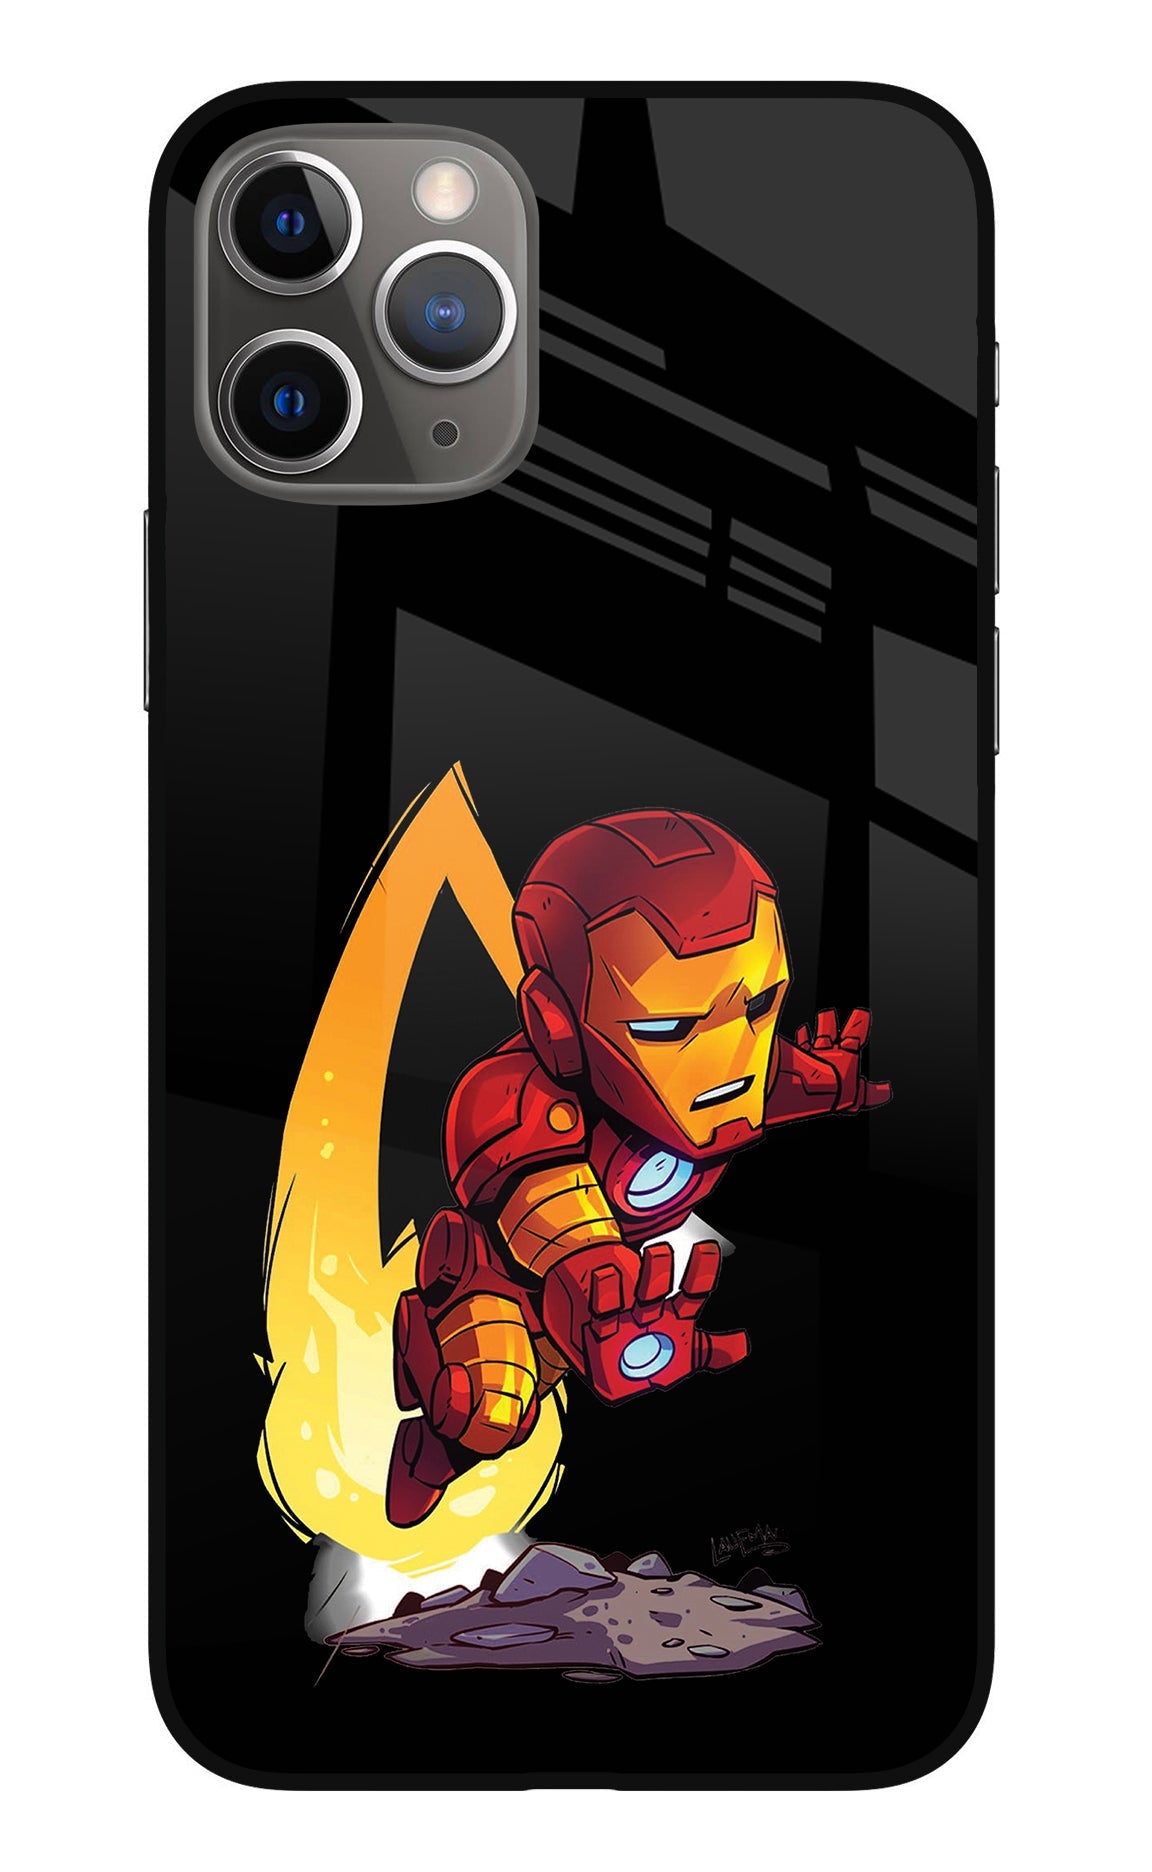 IronMan iPhone 11 Pro Max Glass Case